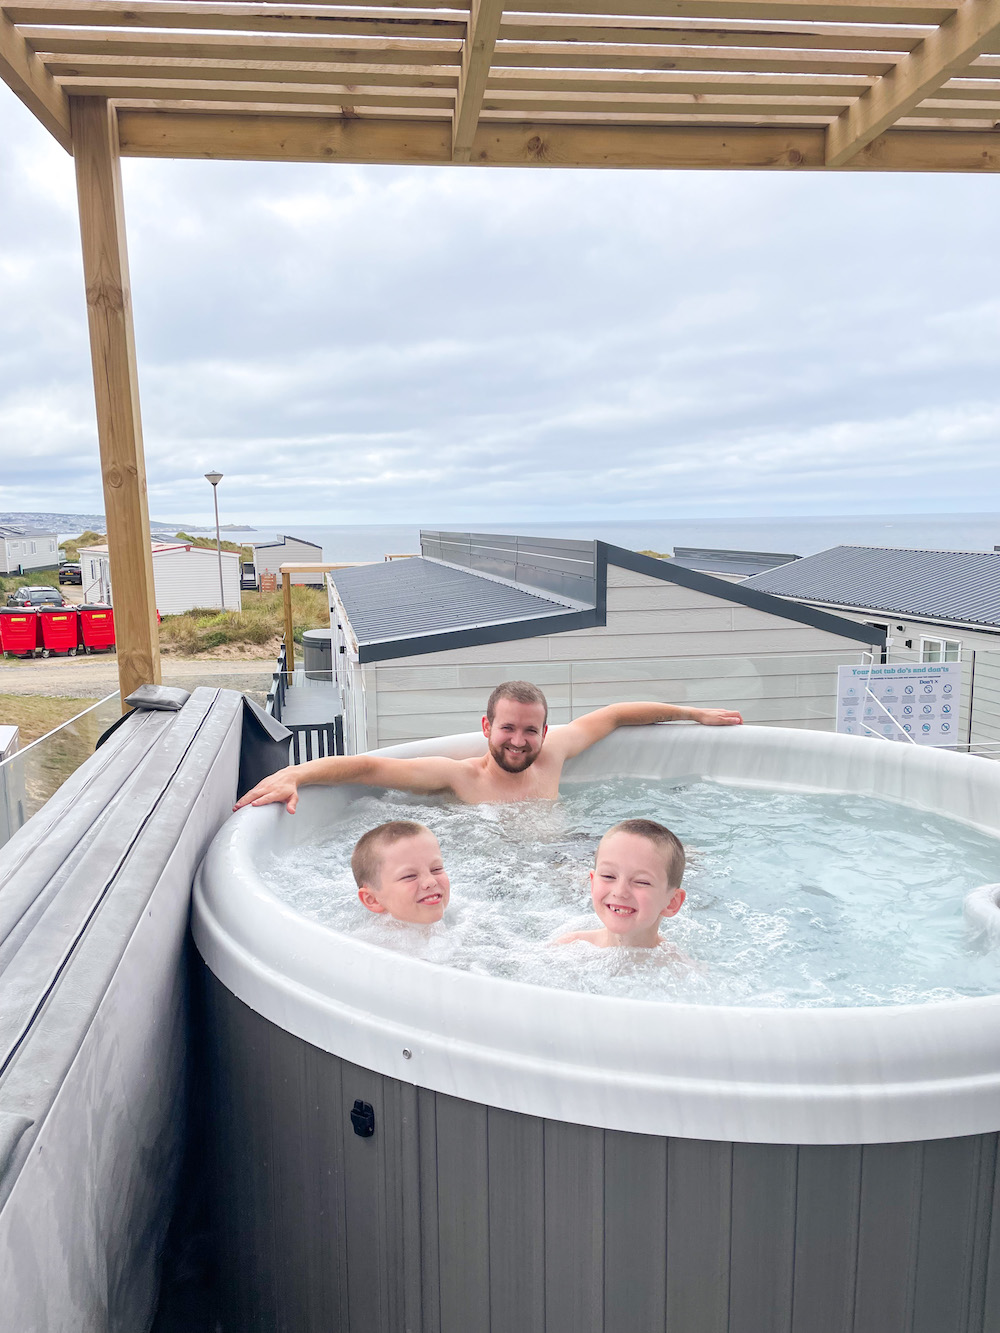 St Ives Bay Cornwall, Away Resorts, Stargazer St Ives Bay, Stargazer Hot Tub, Cornwall Hot tub holiday,